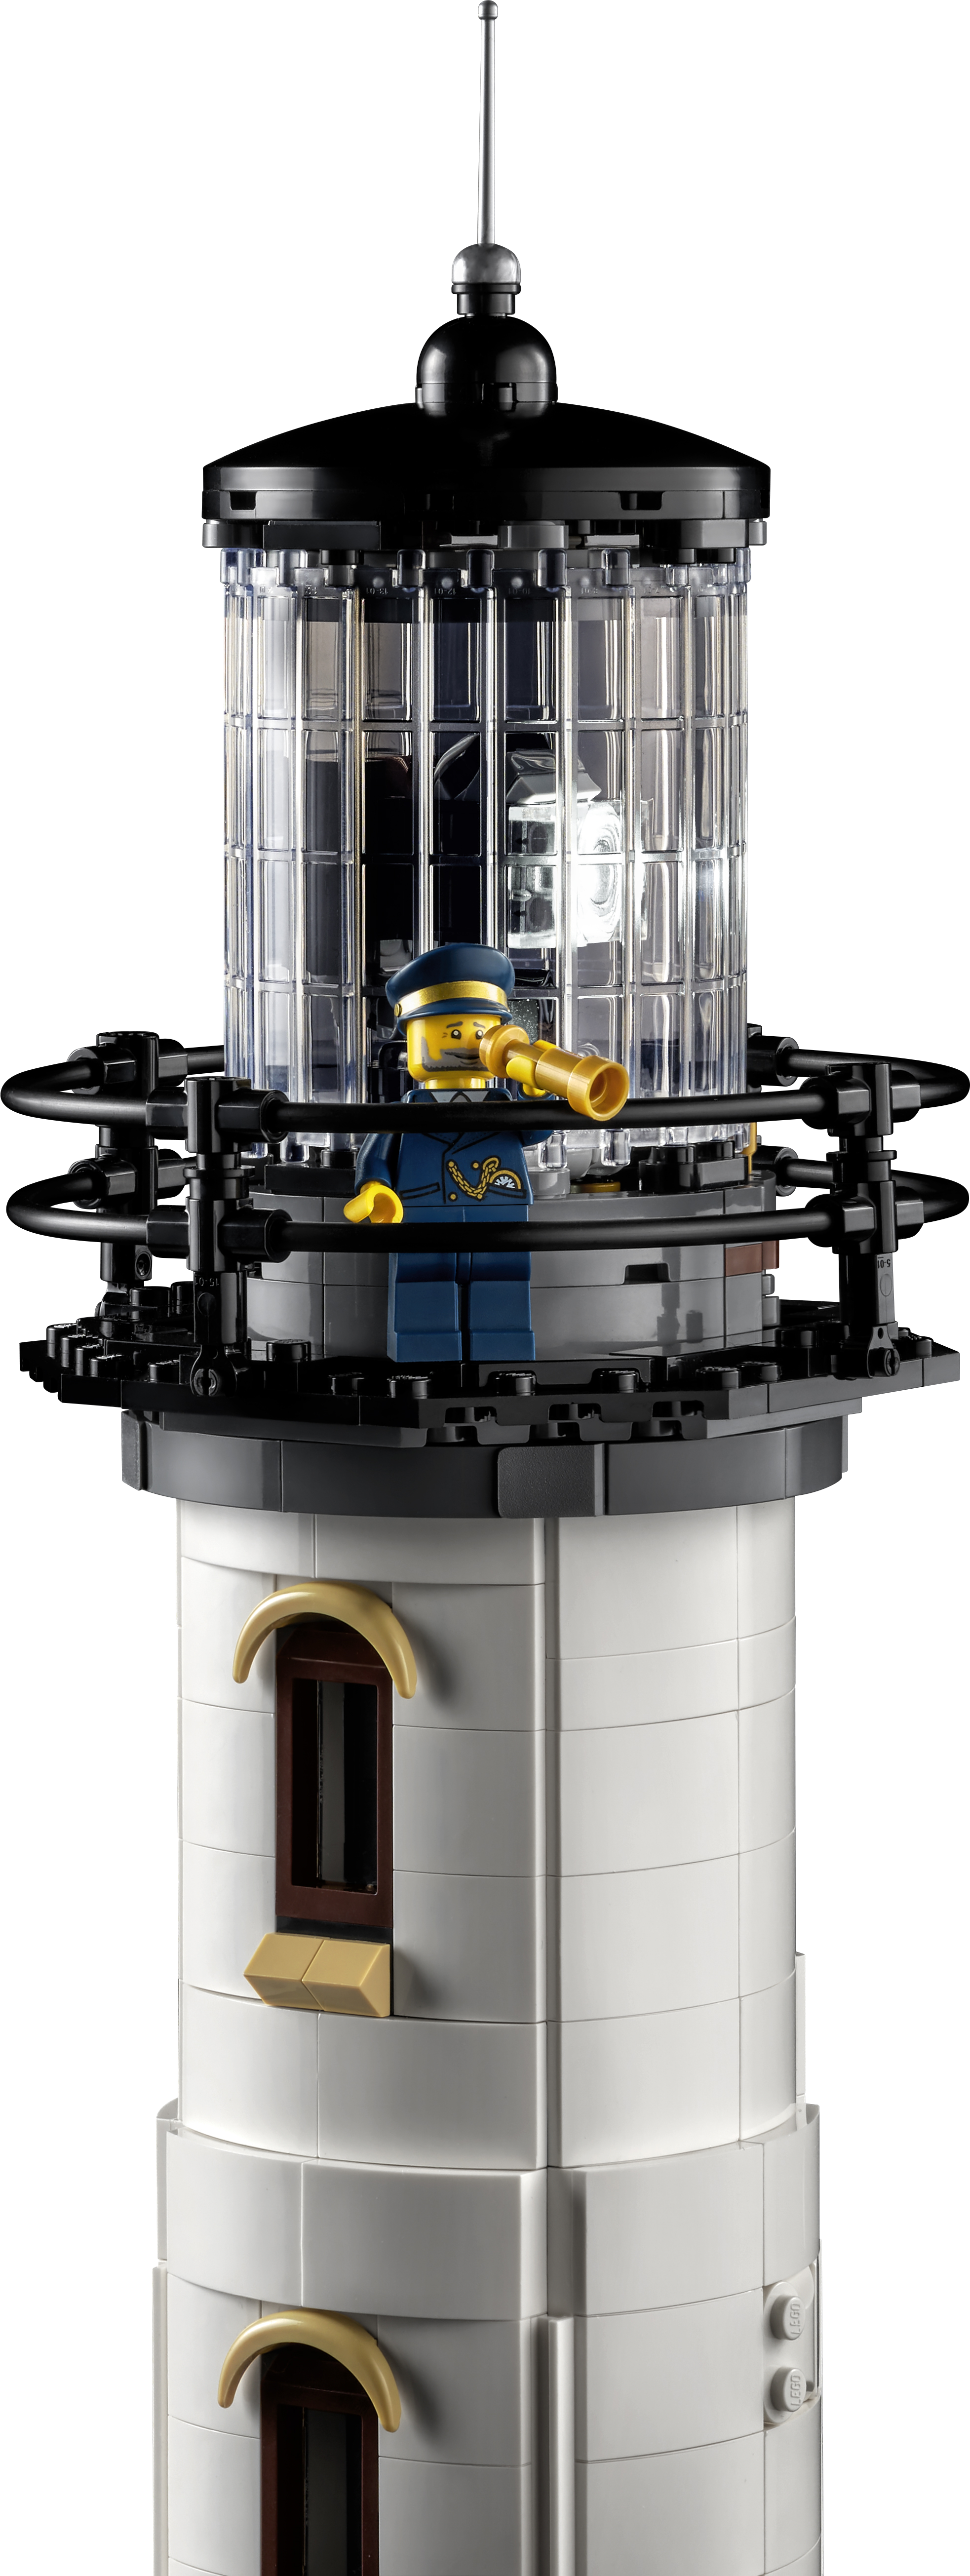 Motorized Lighthouse 21335, Ideas